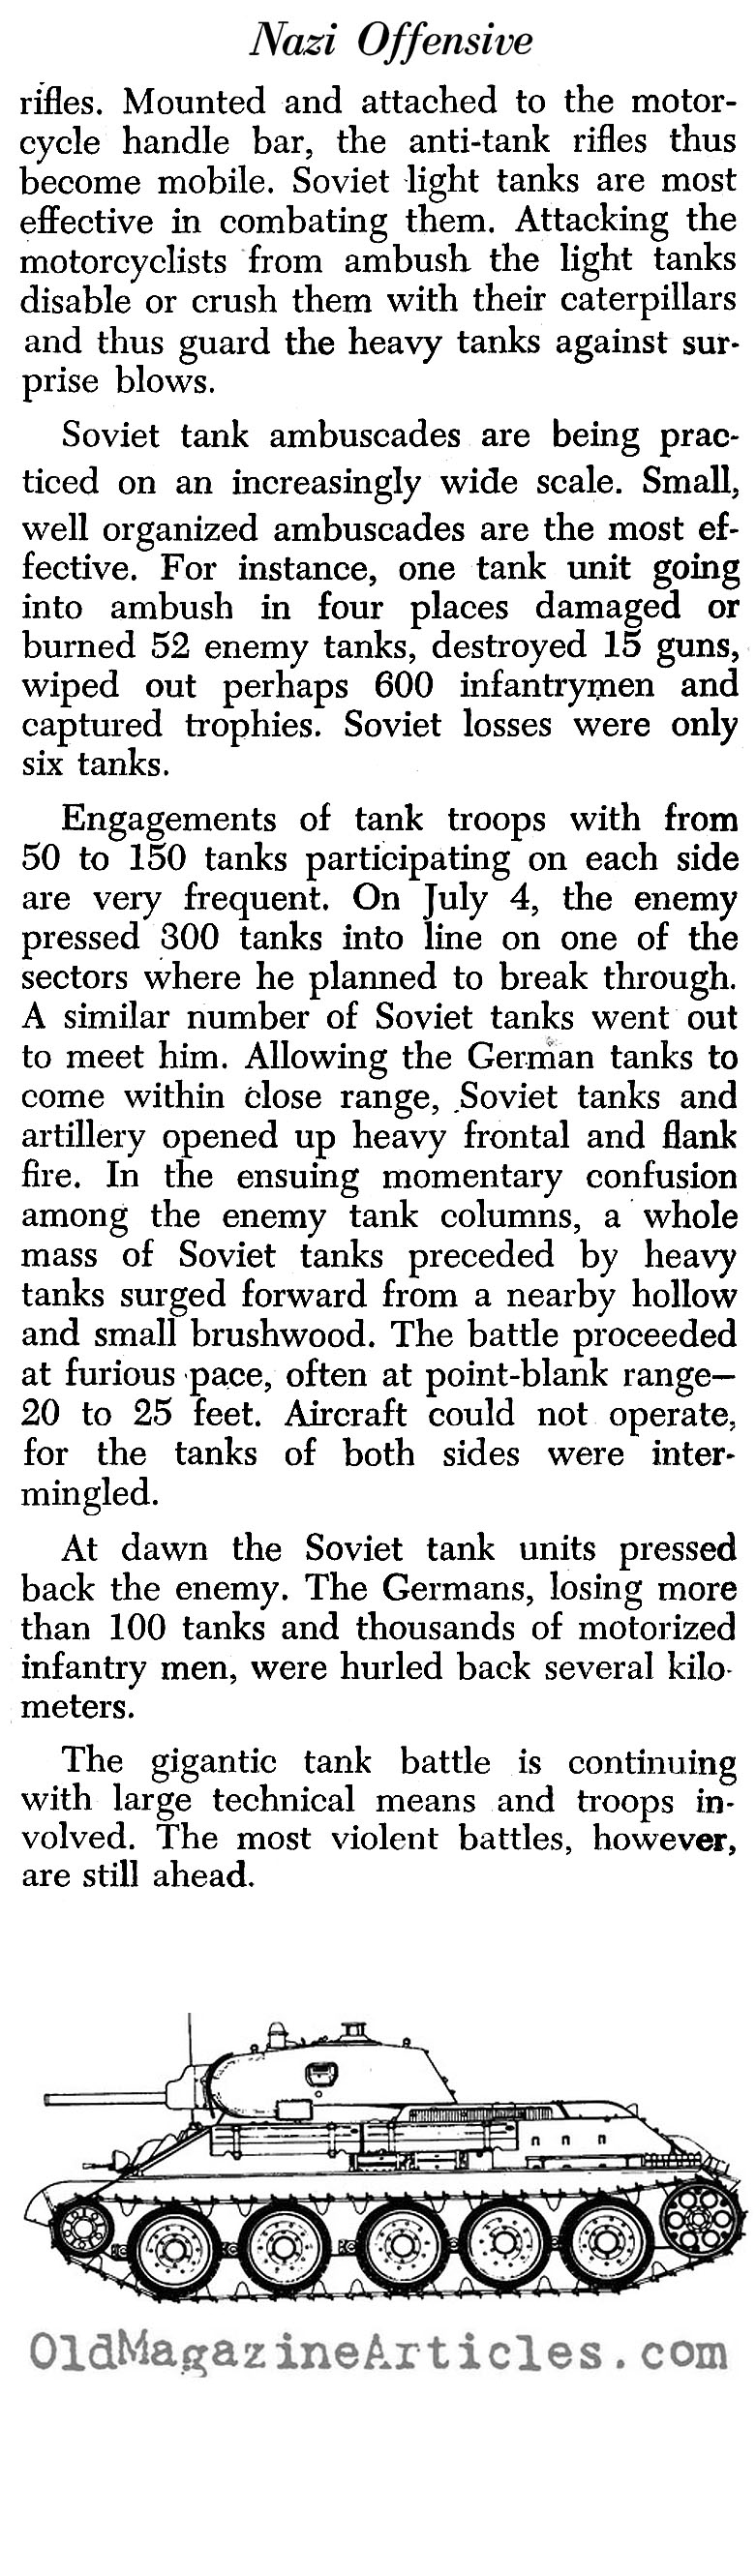 ''Tanks Spearhead Nazi Offensive'' (PM Tabloid, 1942)